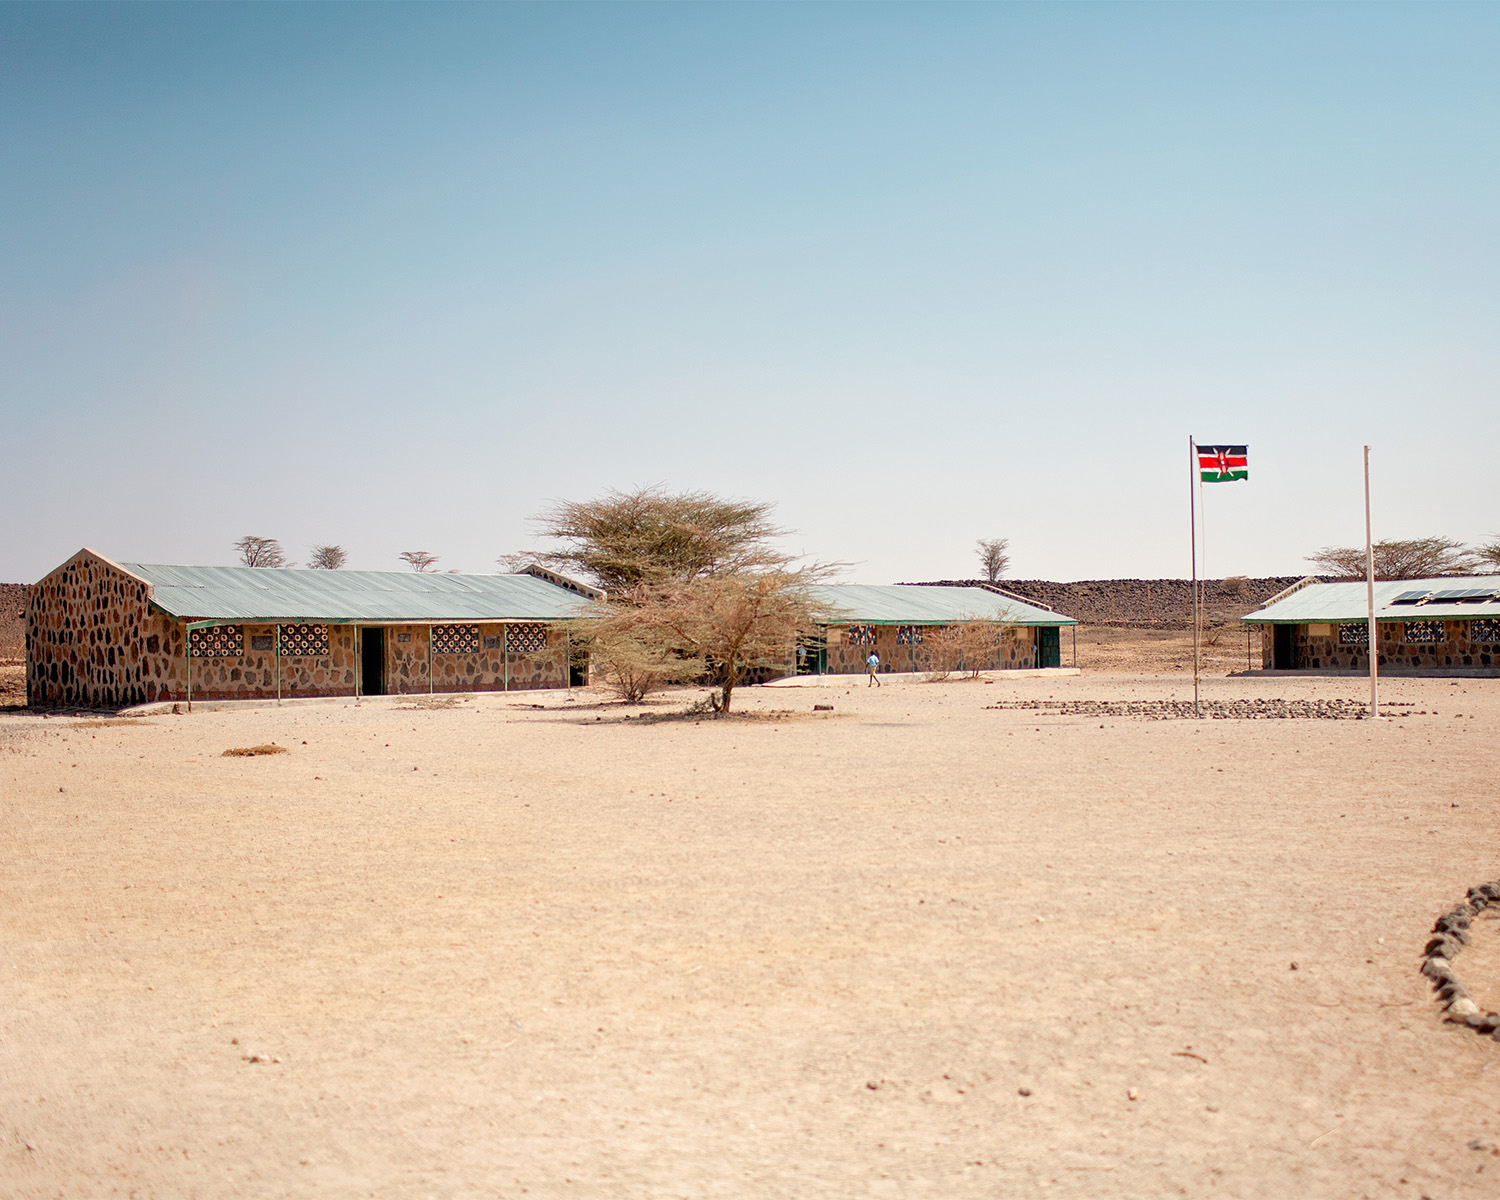 stone school buildings and Kenyan flag